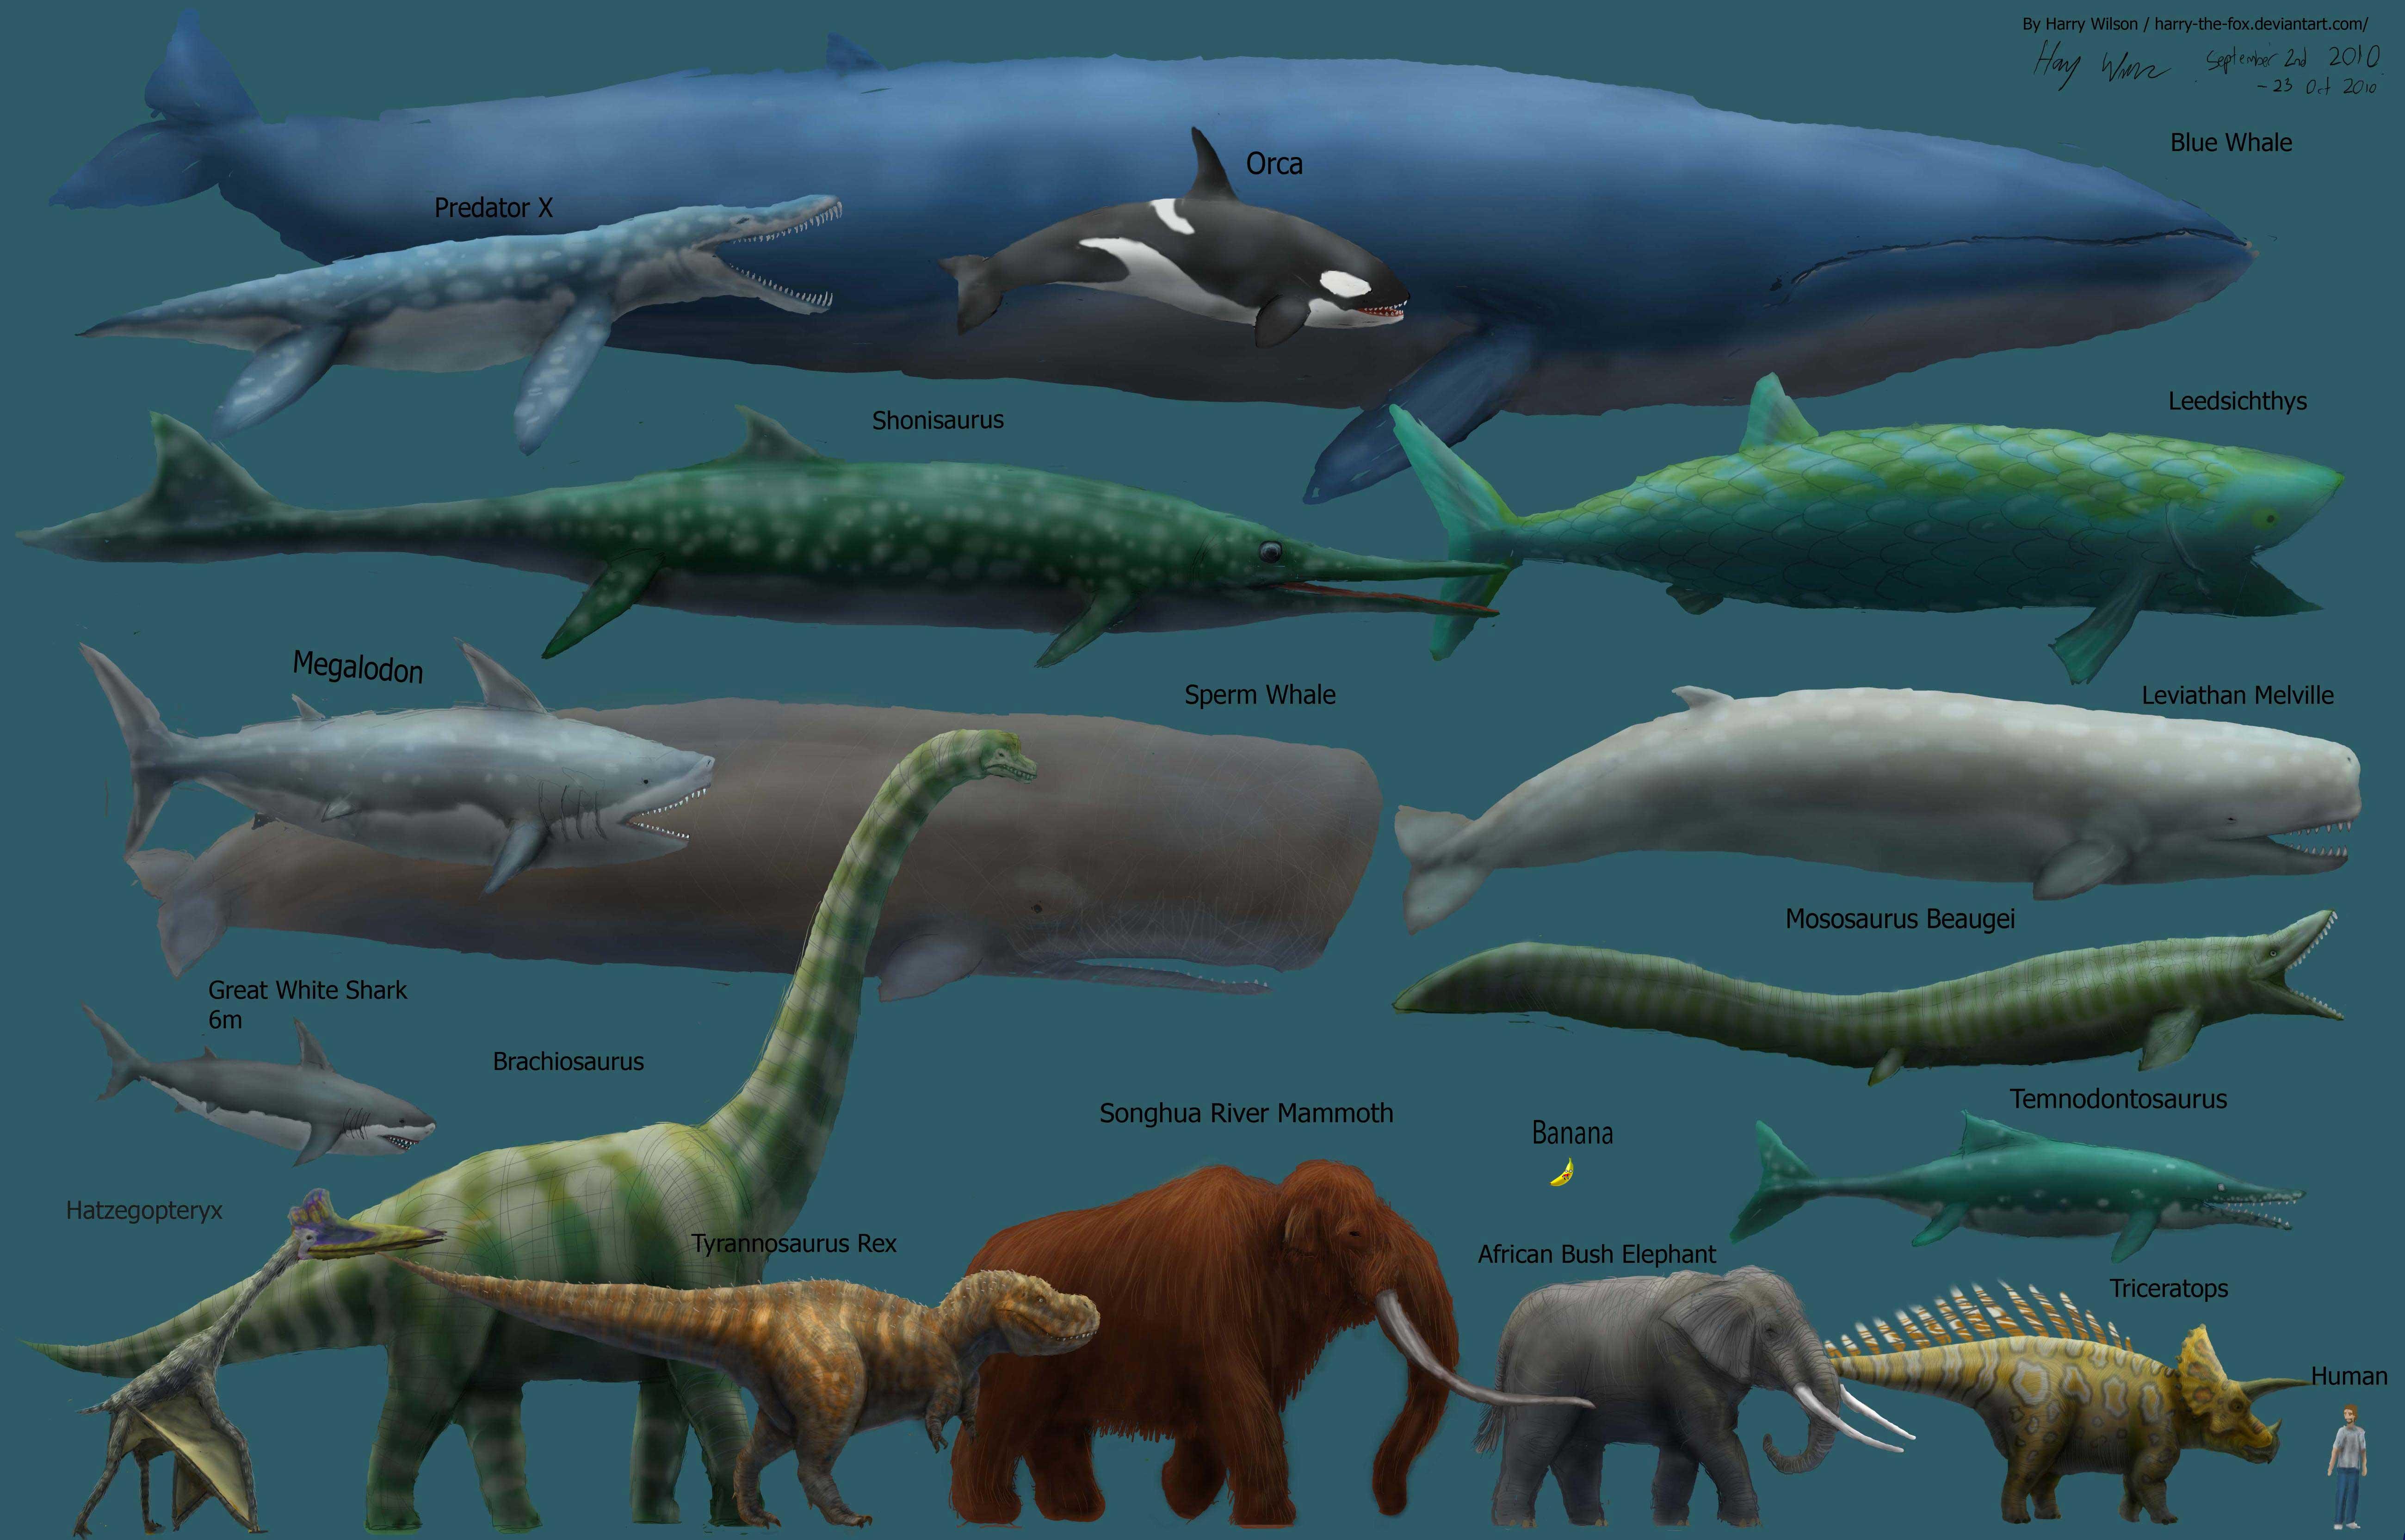 Slon, plavi kit i druge krupne životinje